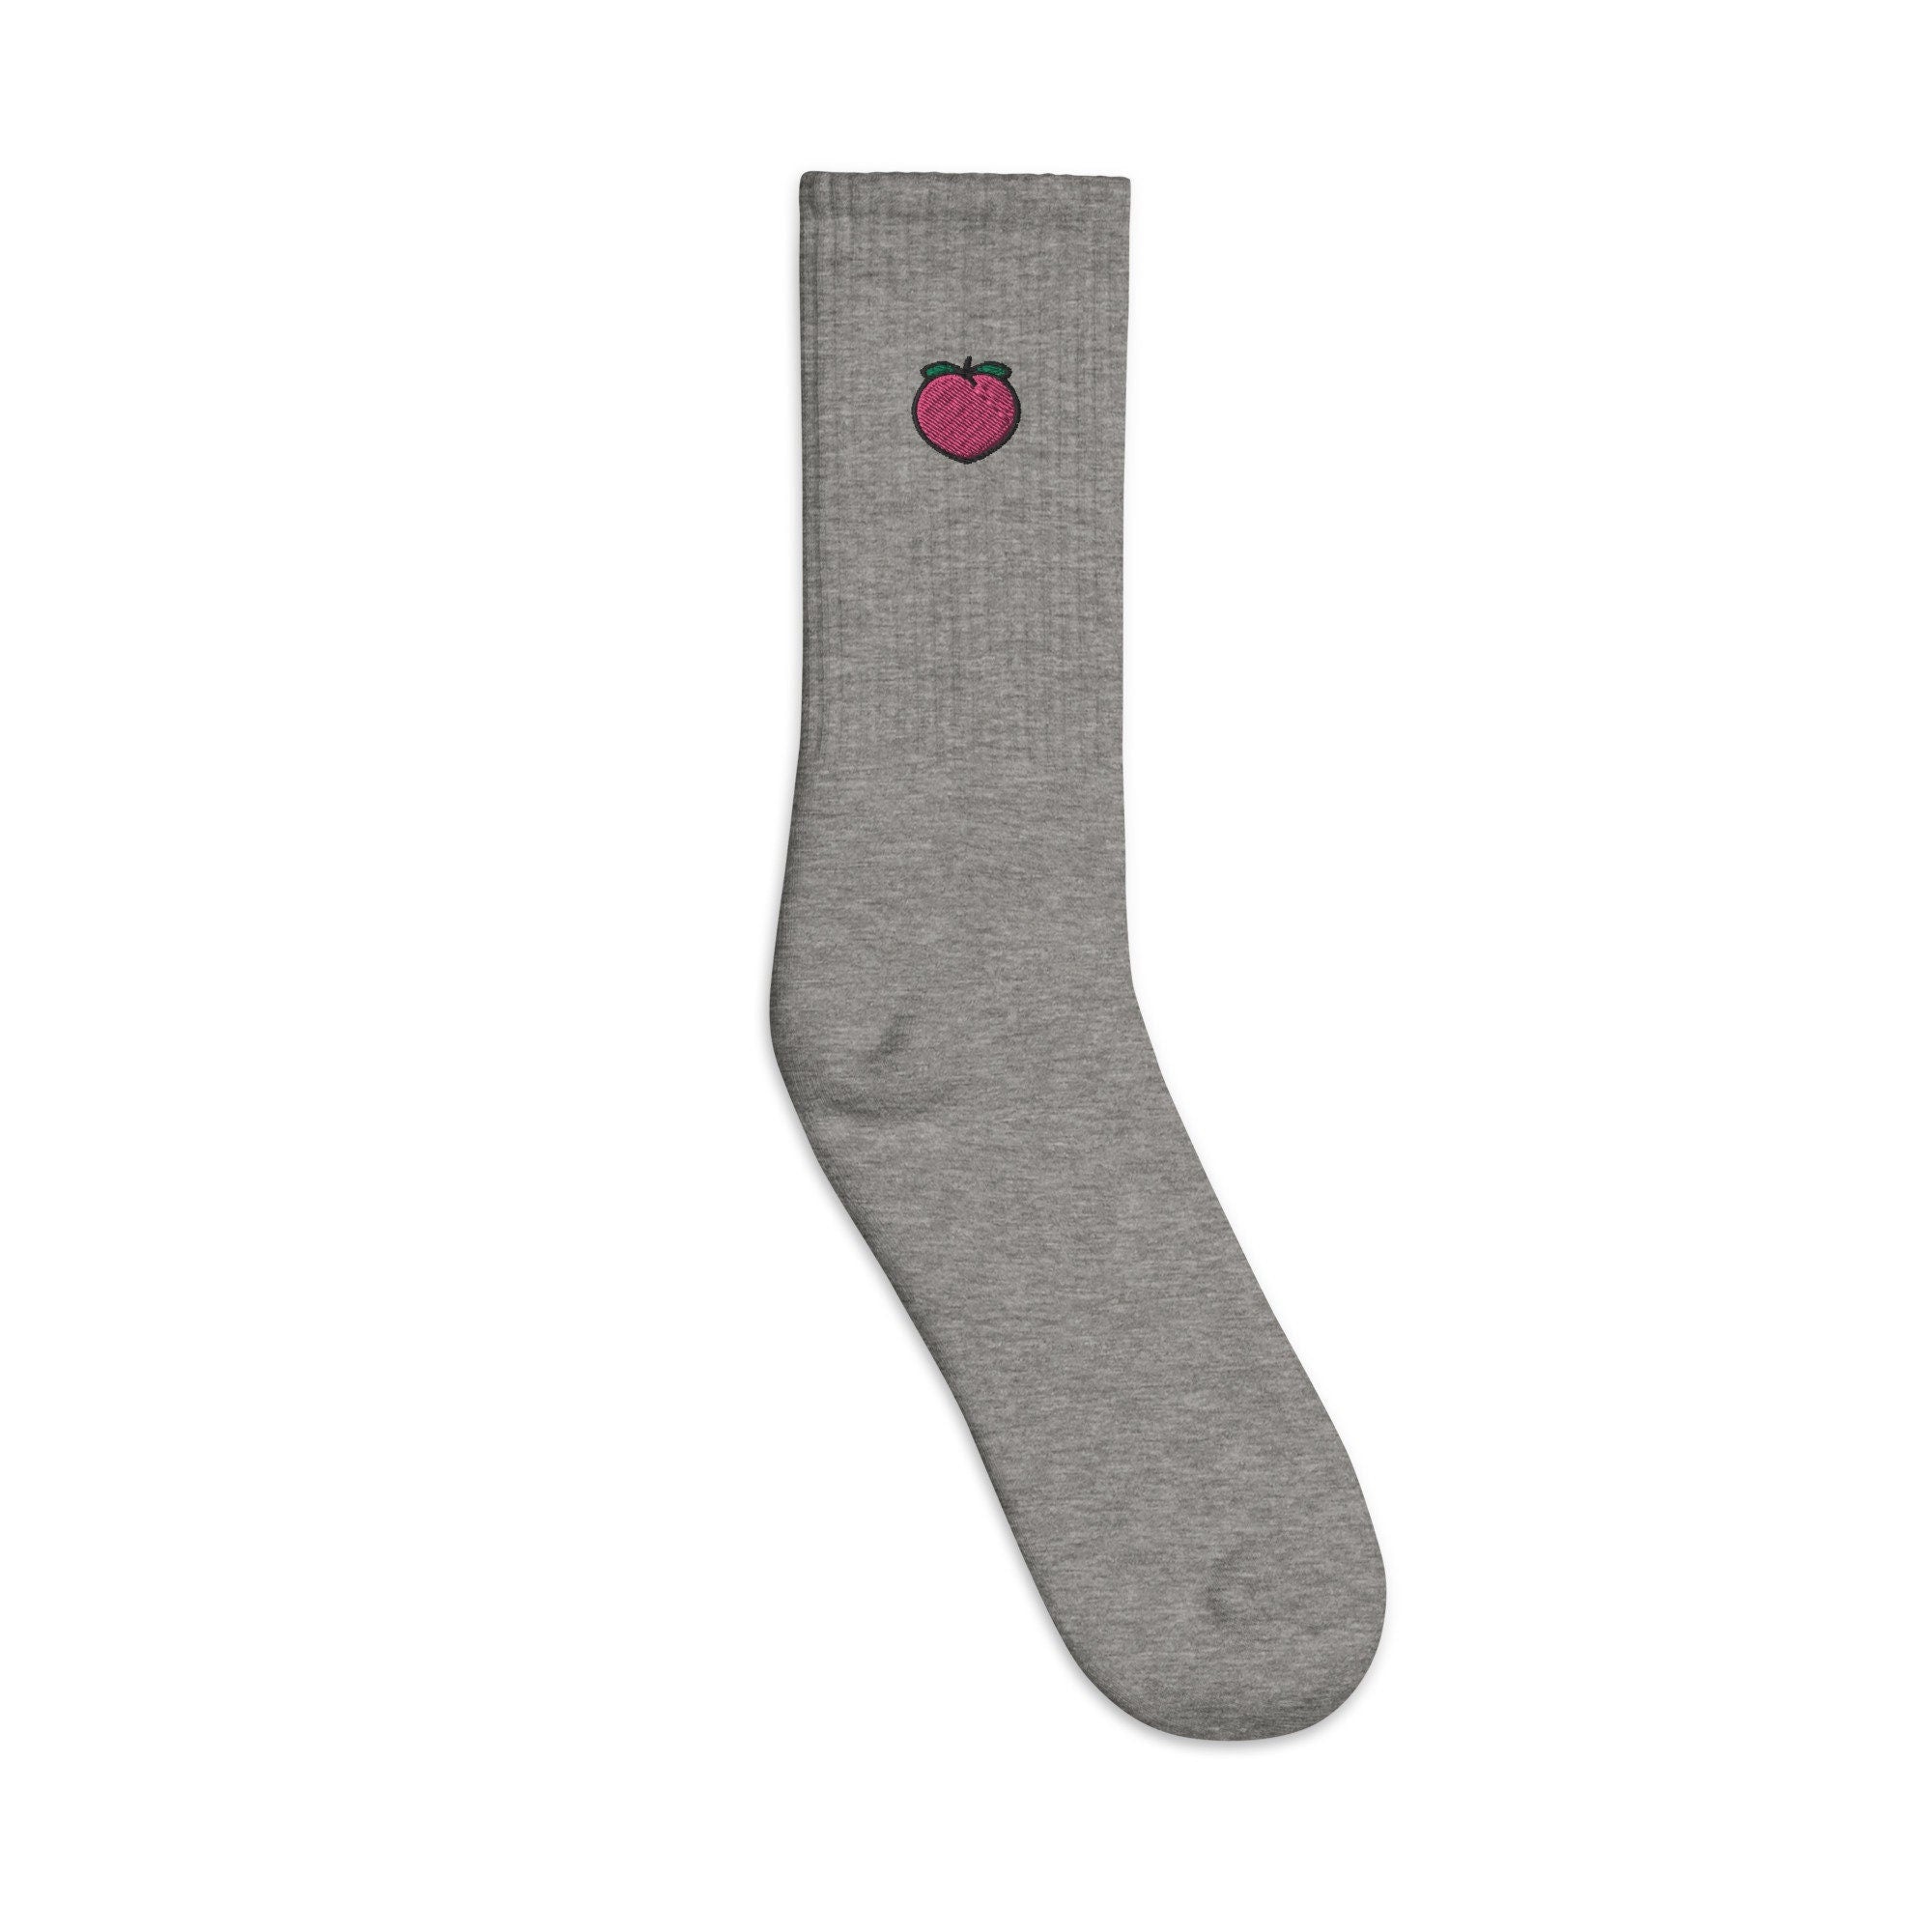 Peach Embroidered Socks, Premium Embroidered Socks, Long Socks Gift - Multiple Colors